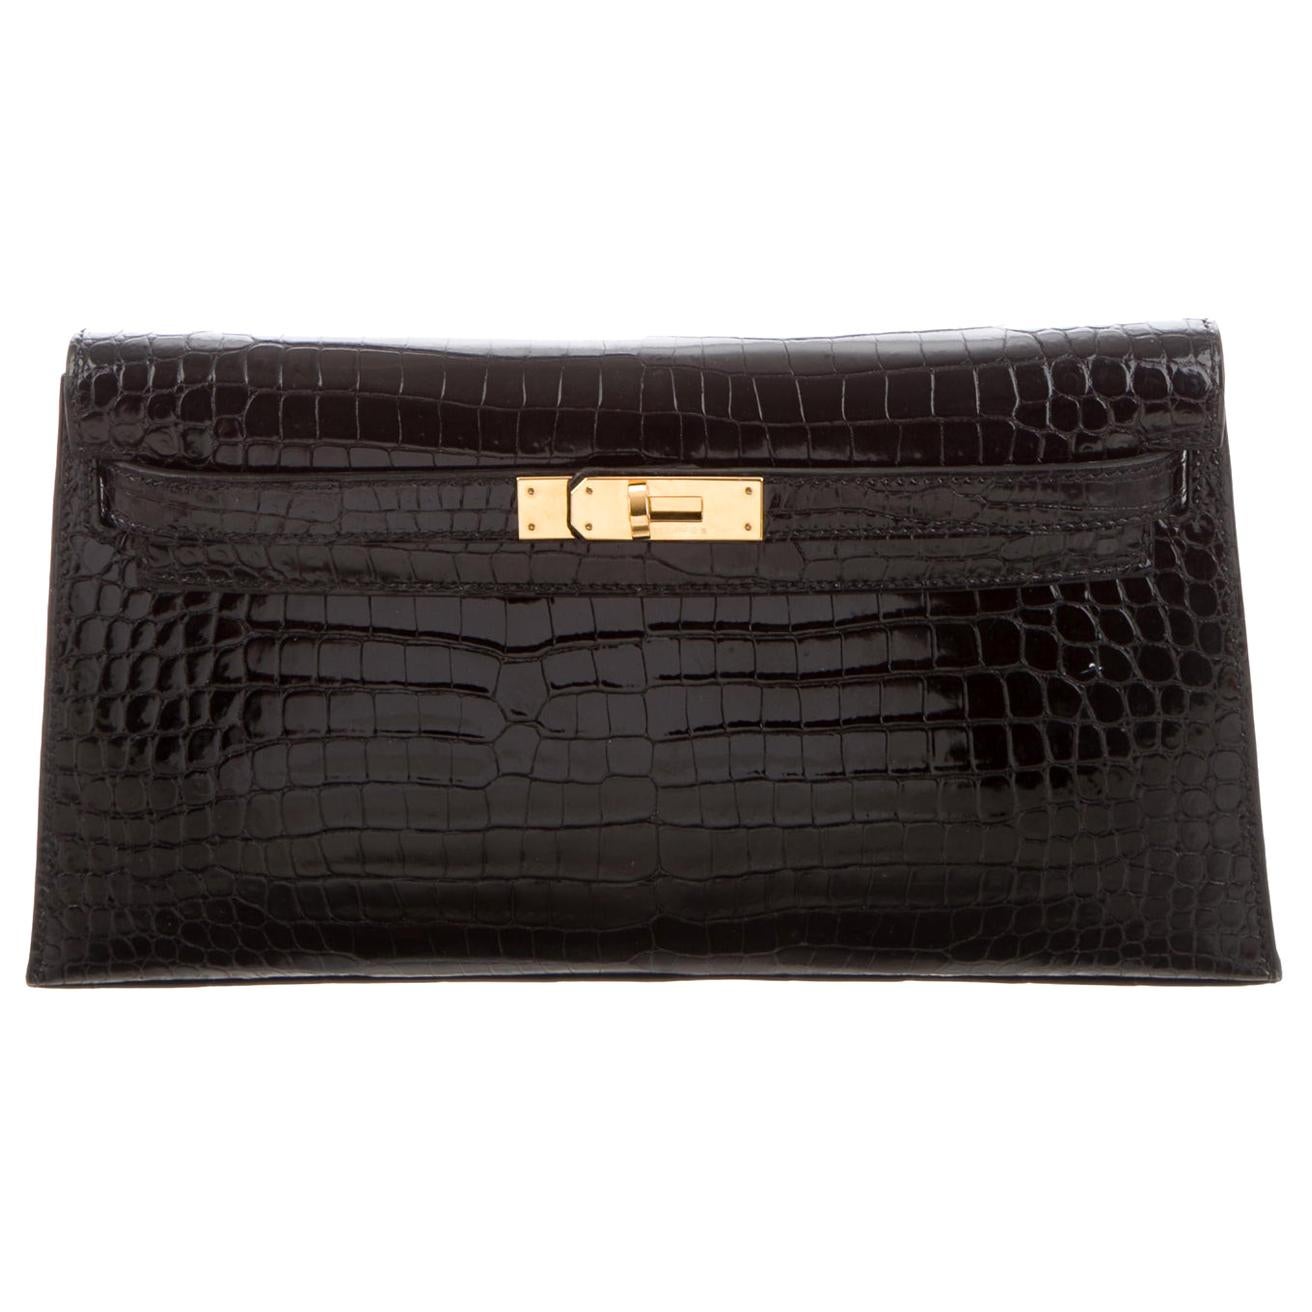 Hermes Black Crocodile Leather Gold Top Handle Satchel Evening Clutch Flap Bag